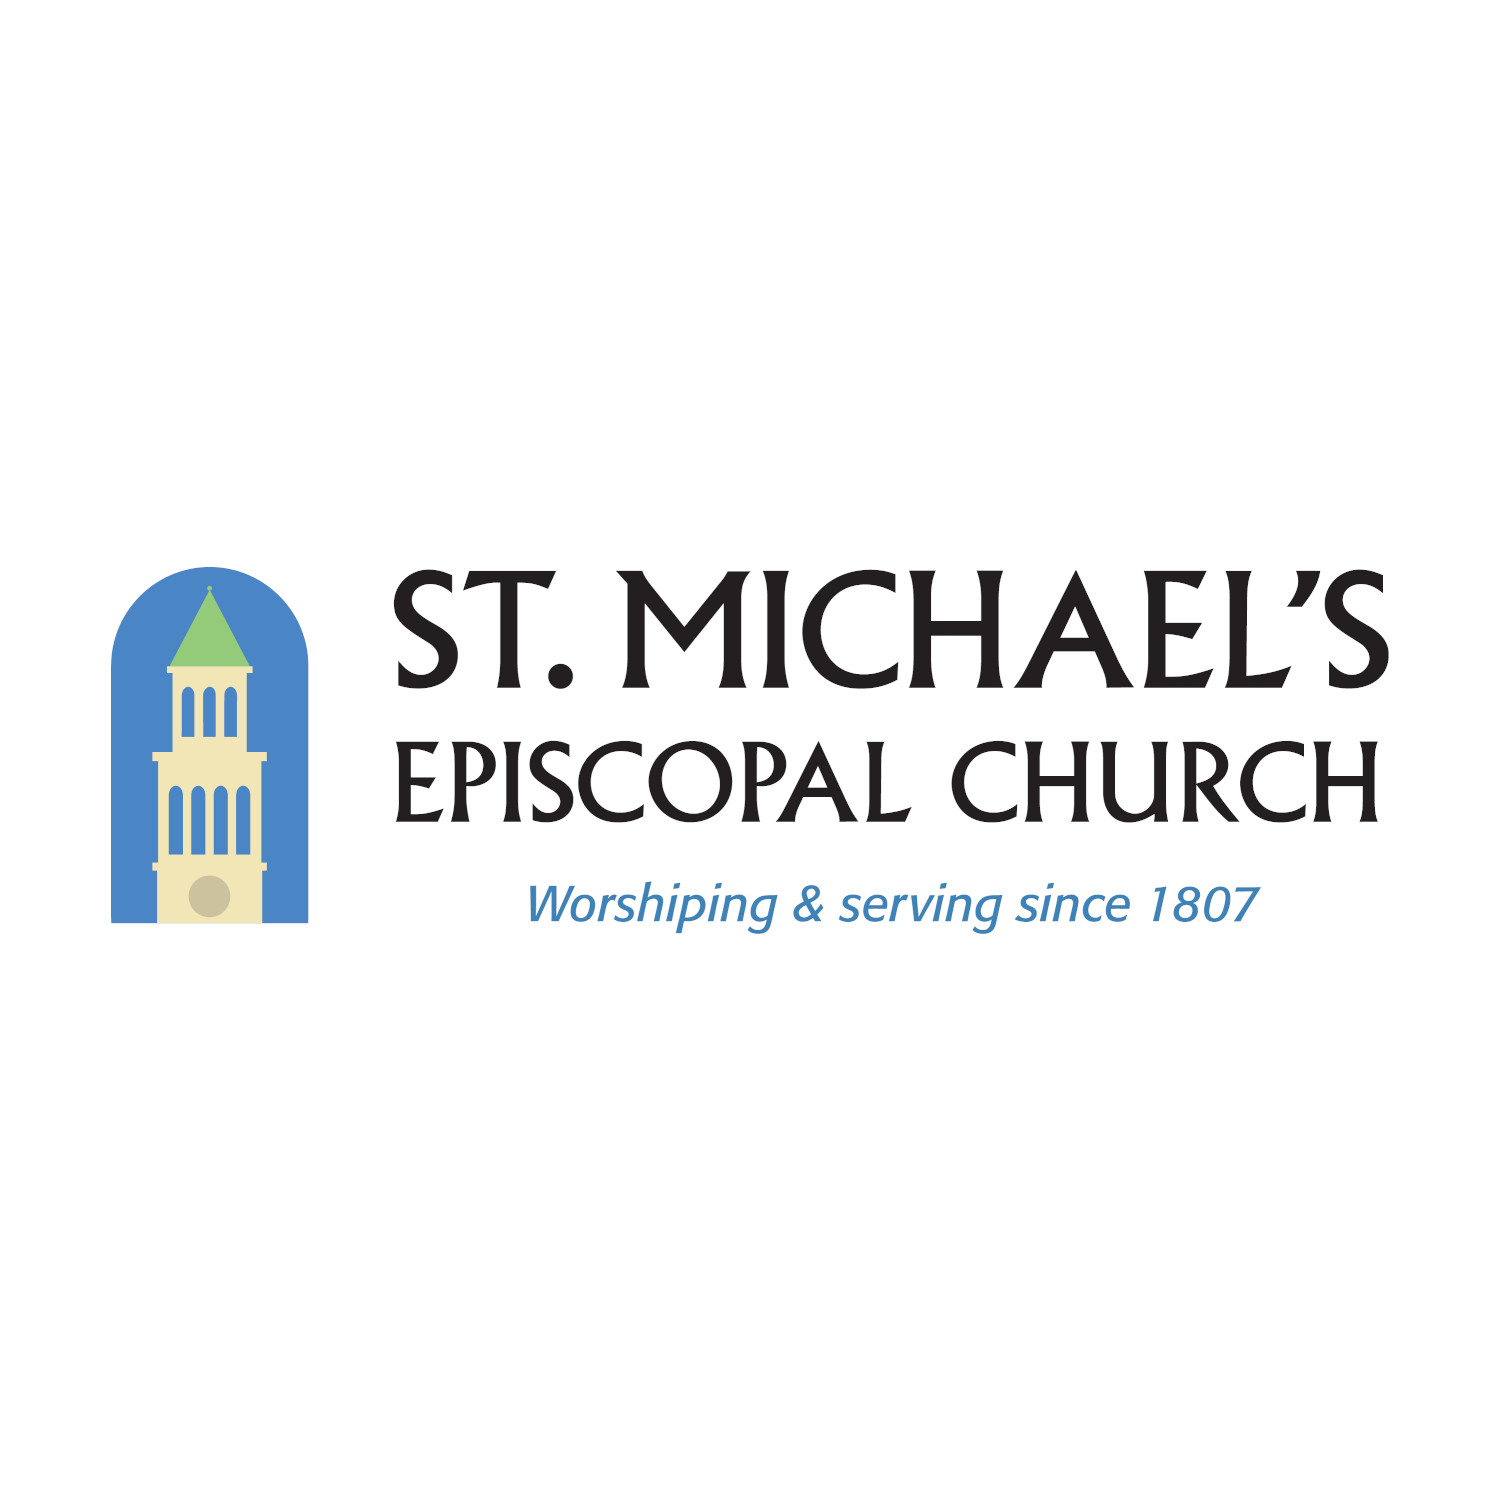 St. Michael's Episcopal Church Sunday Sermons